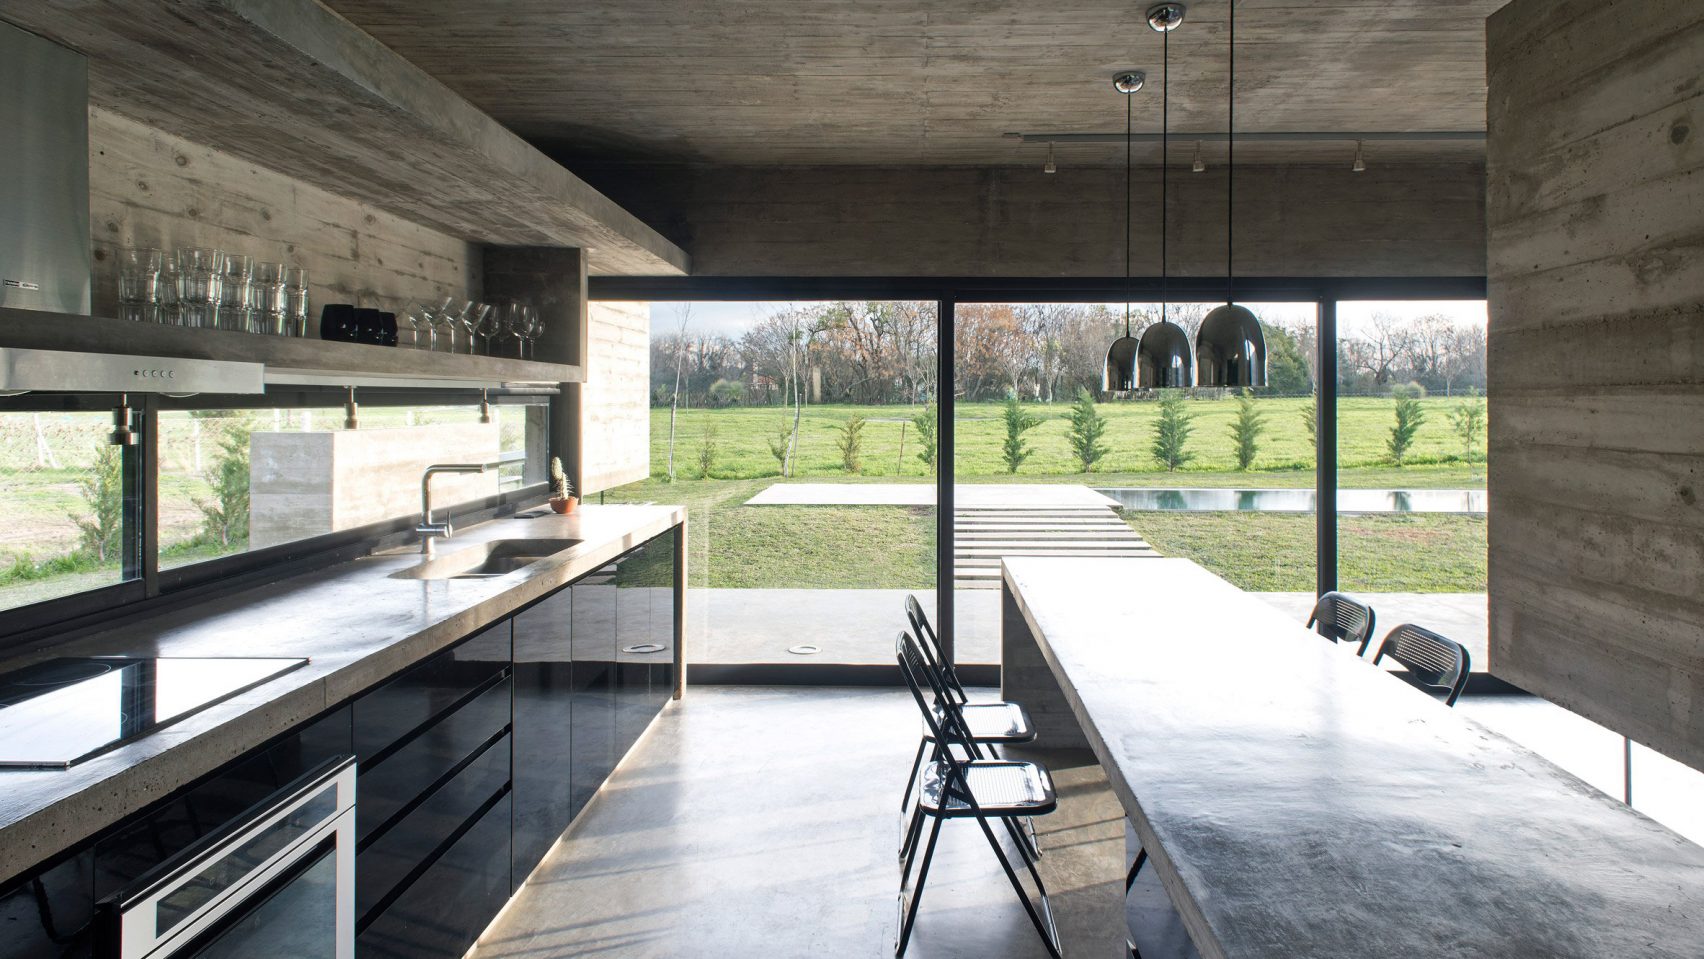 Beton v interiéru. Minimalismus oslavuje surovou jednoduchost a čistotu